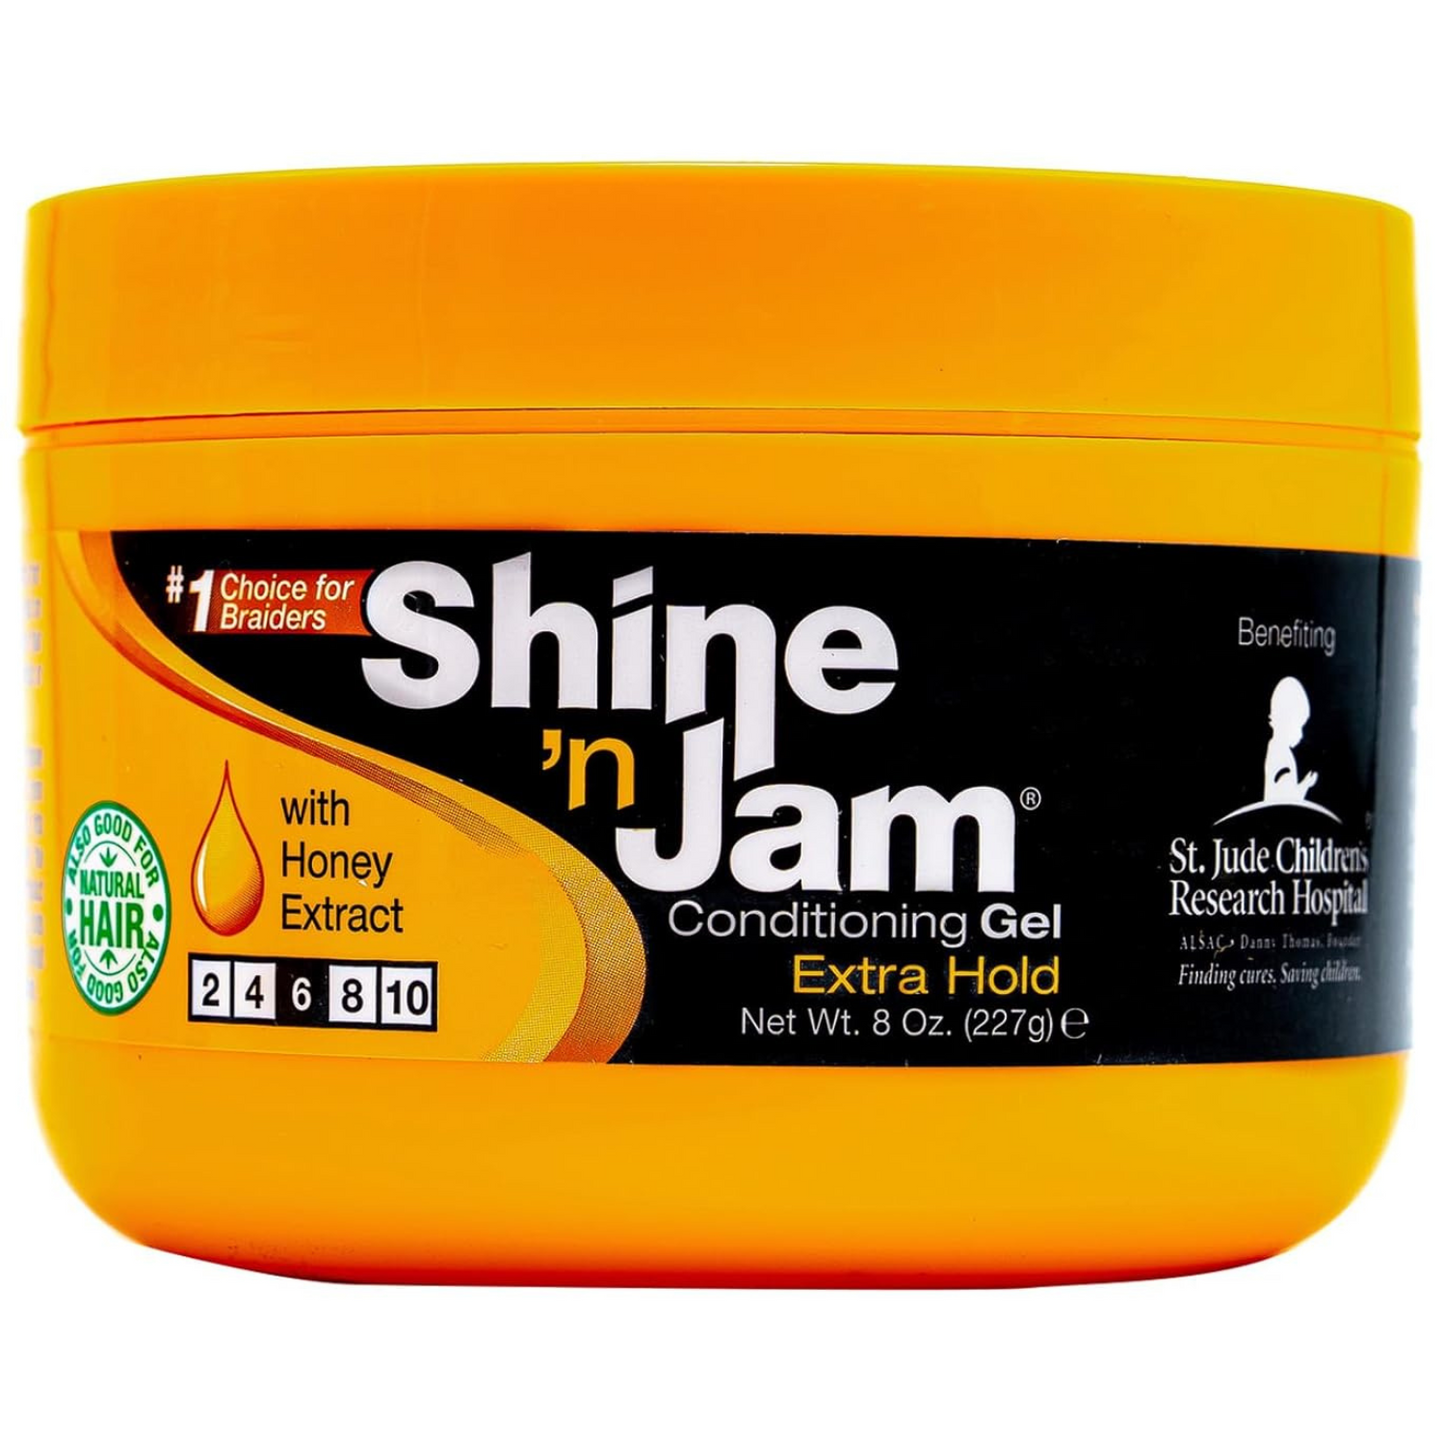 Ampro Shine N Jam Extra Hold Conditioning Styling & Gel para trenzas